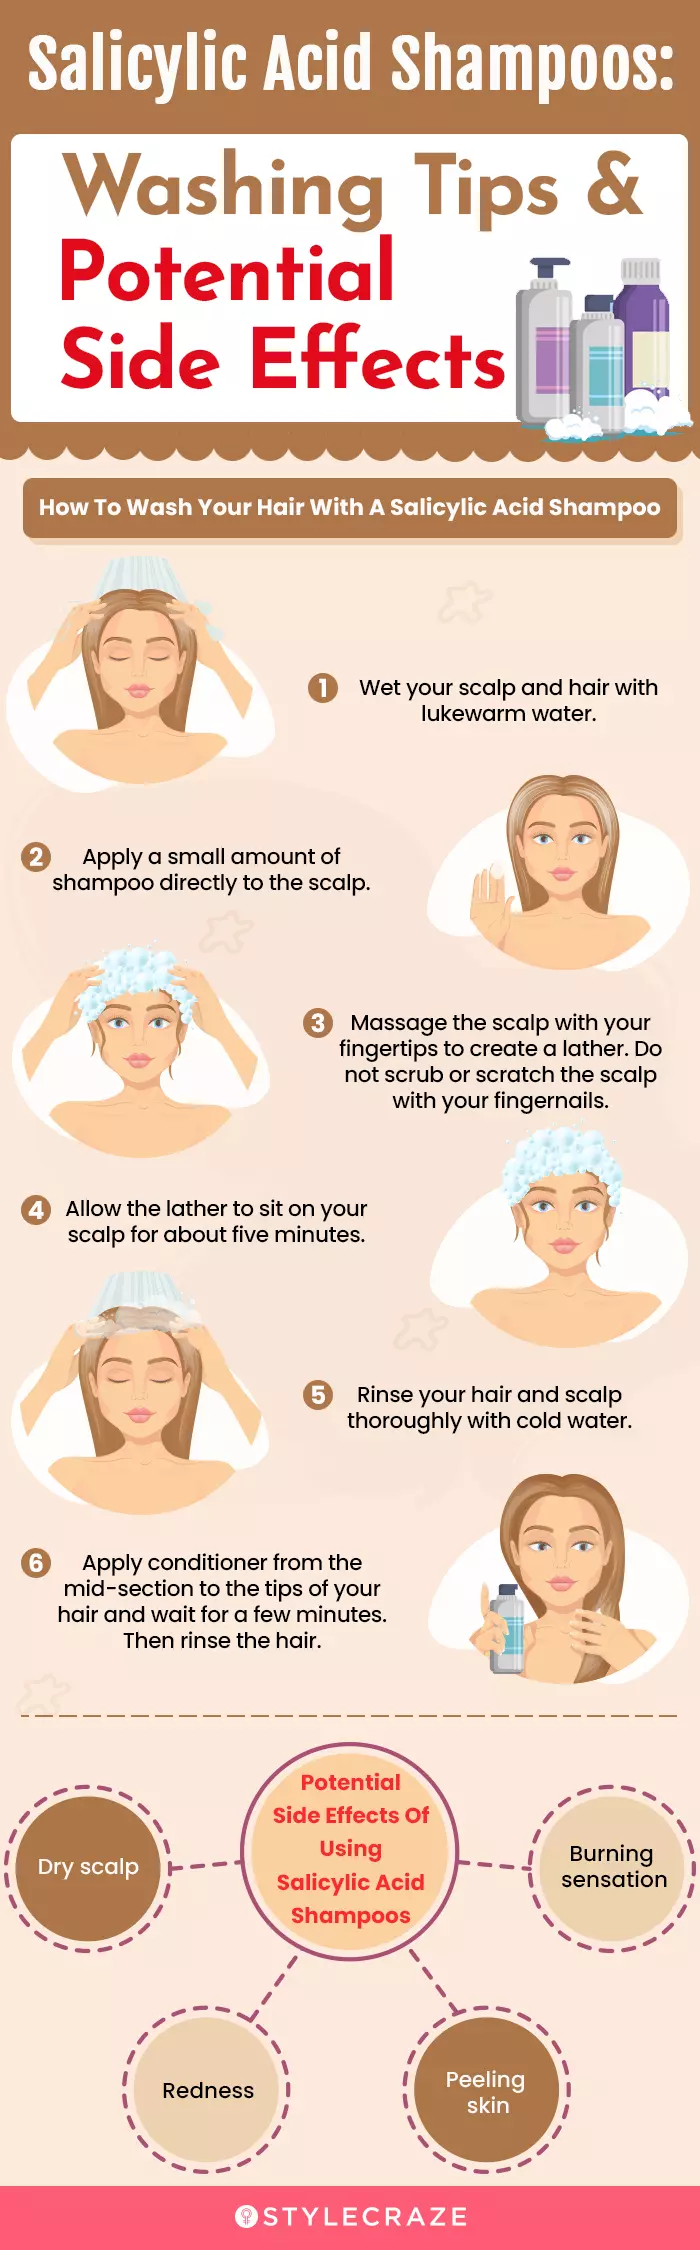 Salicylic Acid Shampoos: Washing Tips & Side Effects (infographic)